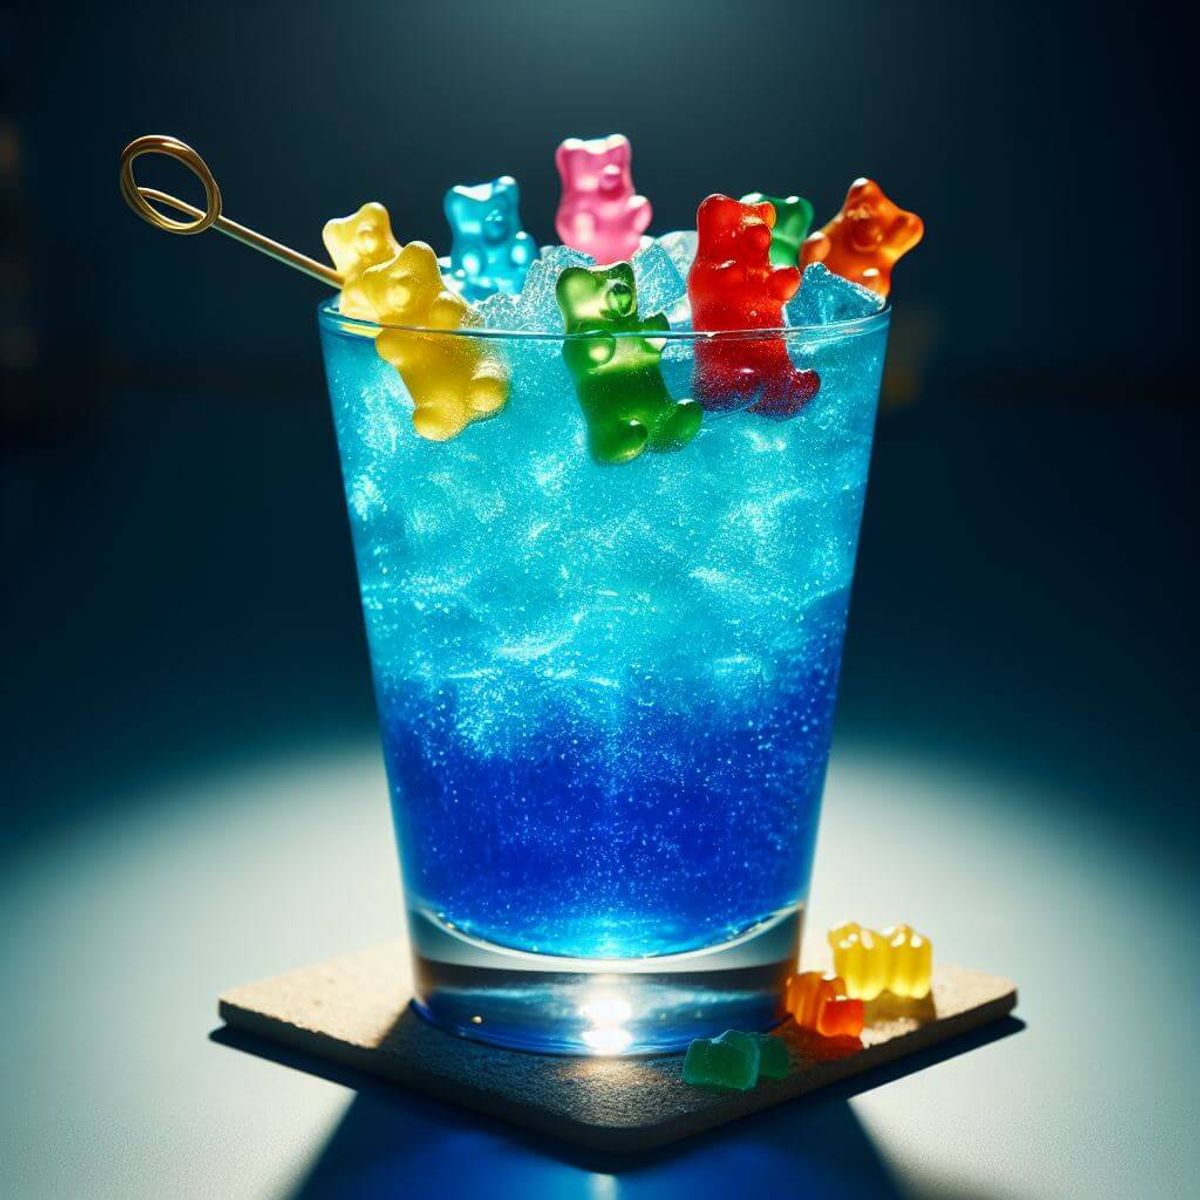 Blue Hawaii Gummy Bears